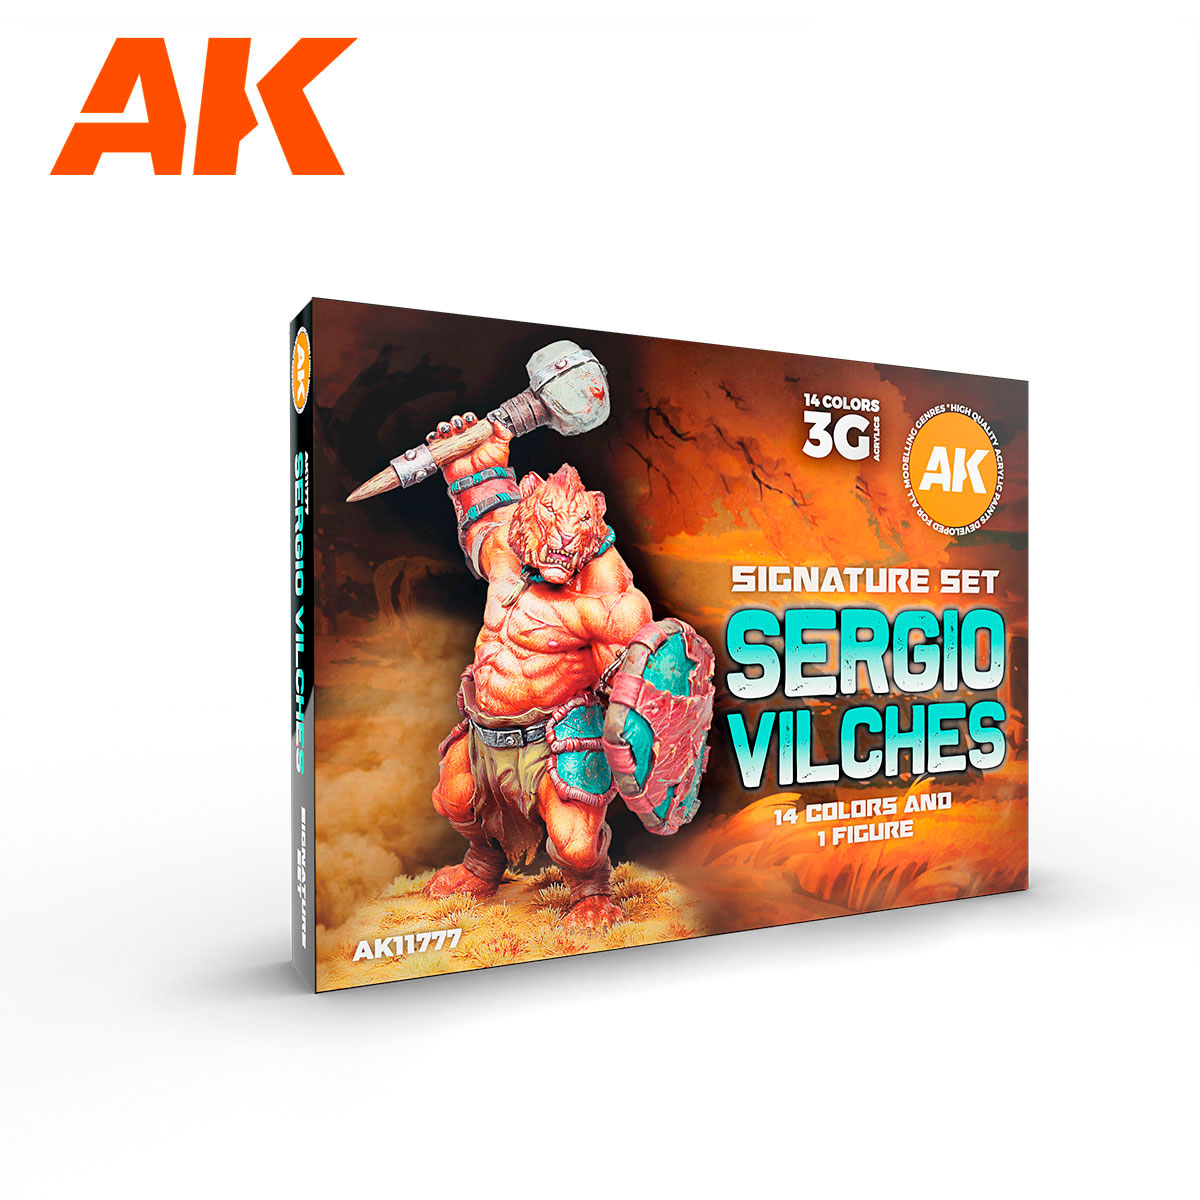 AK Interactive Paint Set - Tracks & Wheels (AFV Series) 3G Acrylics